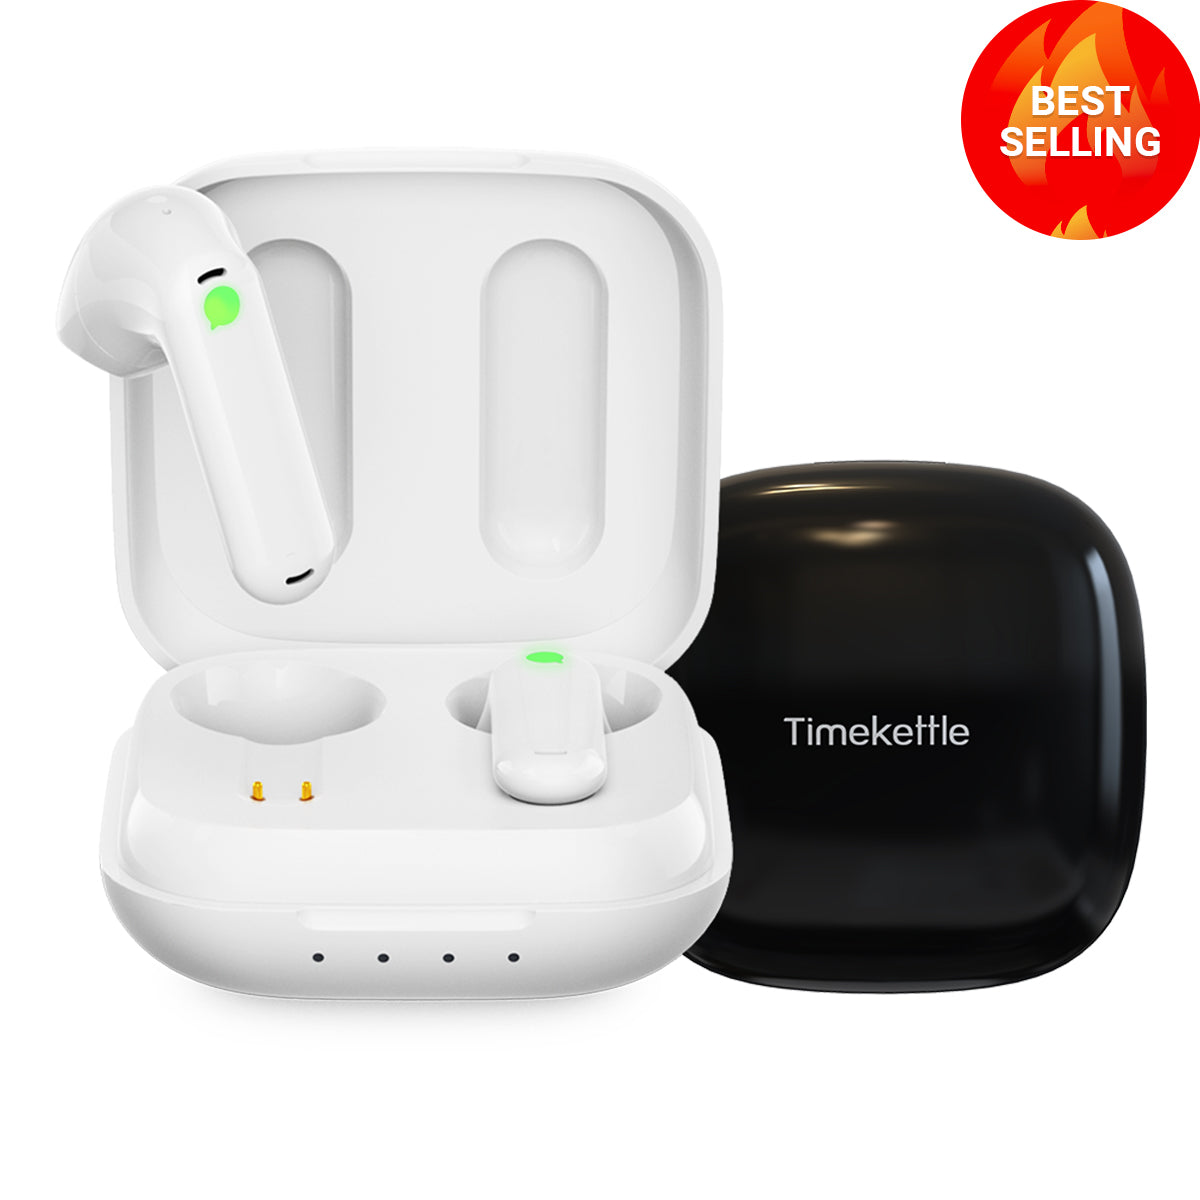 Timekettle WT2 Plus Translator Earbuds